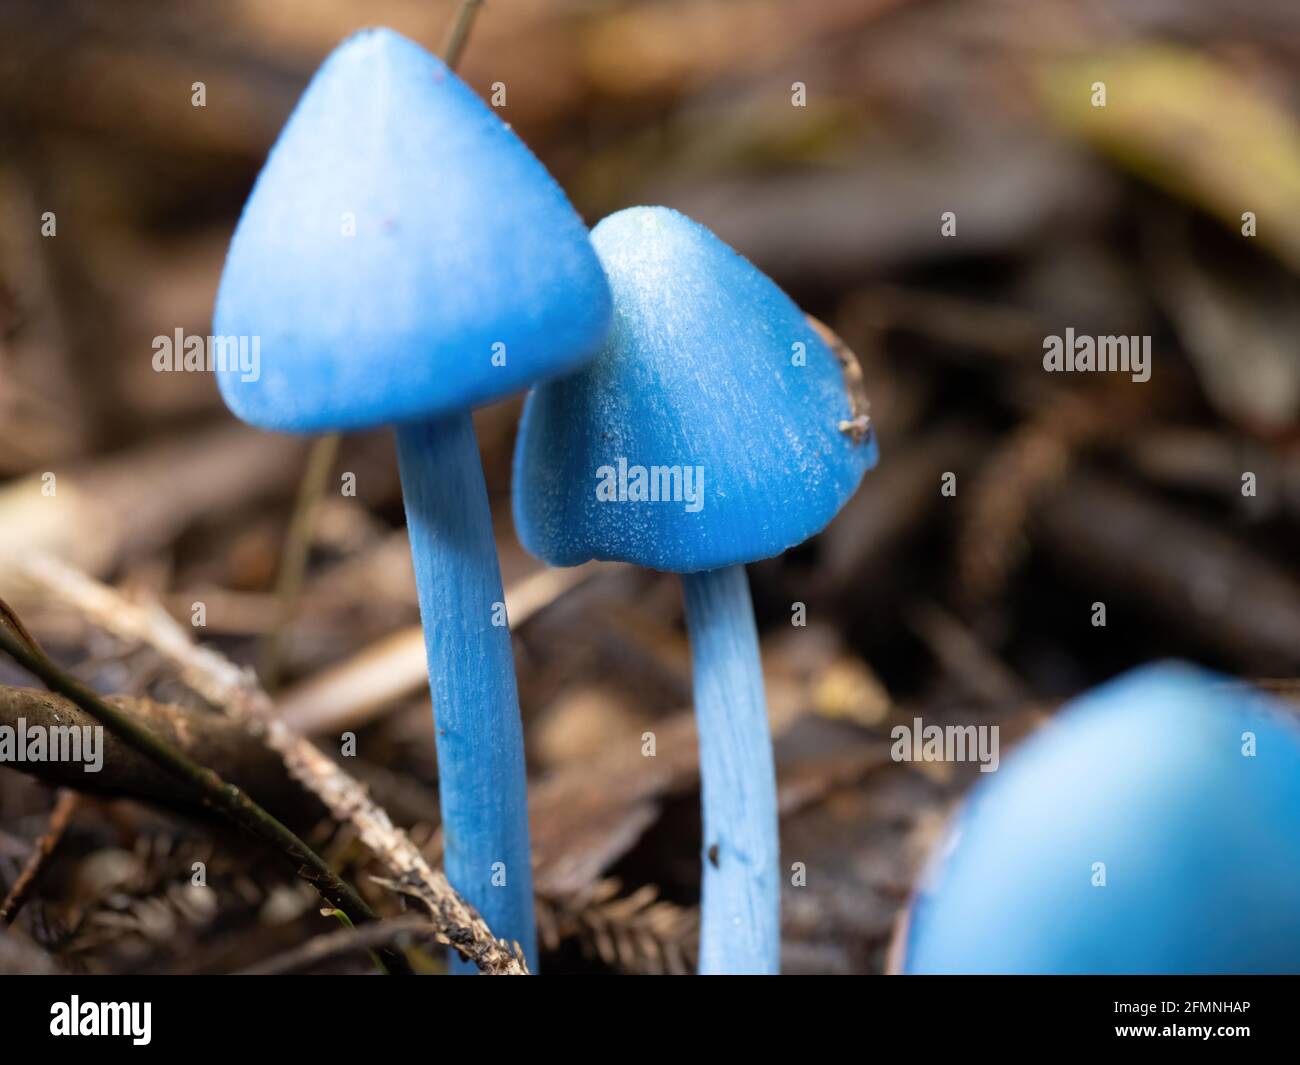 AUCKLAND, NEW ZEALAND - Apr 27, 2021: Werewere-kokako blue magic mushrooms (Entoloma hochstetteri) in Waitakere Ranges regional park, New Zealand Stock Photo